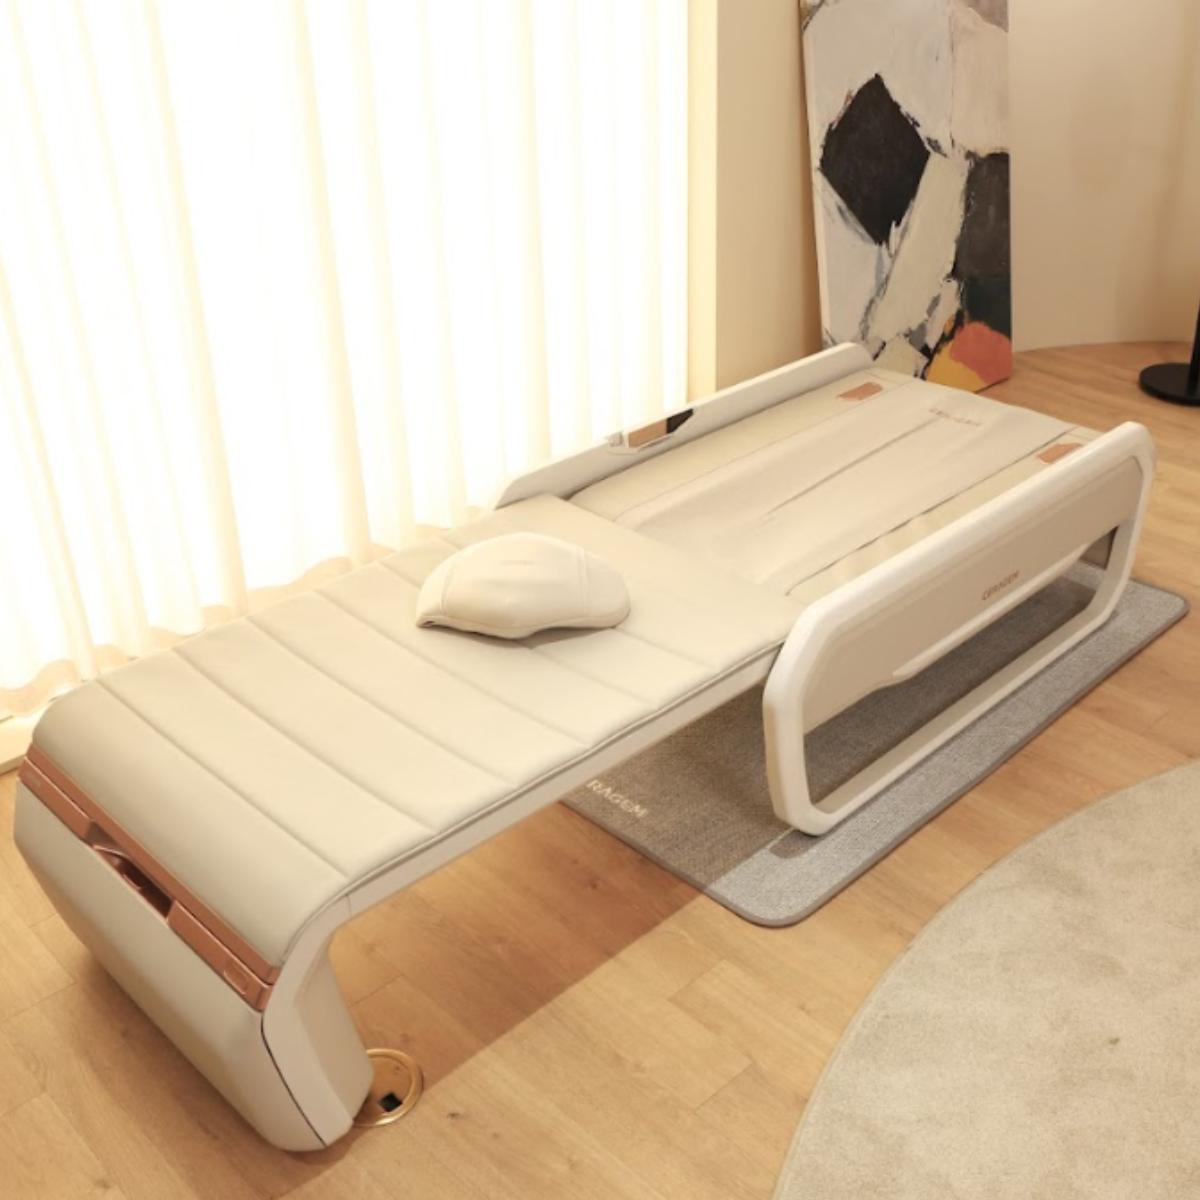 Ceragem V6 Therapeutic Home Thermal Massager